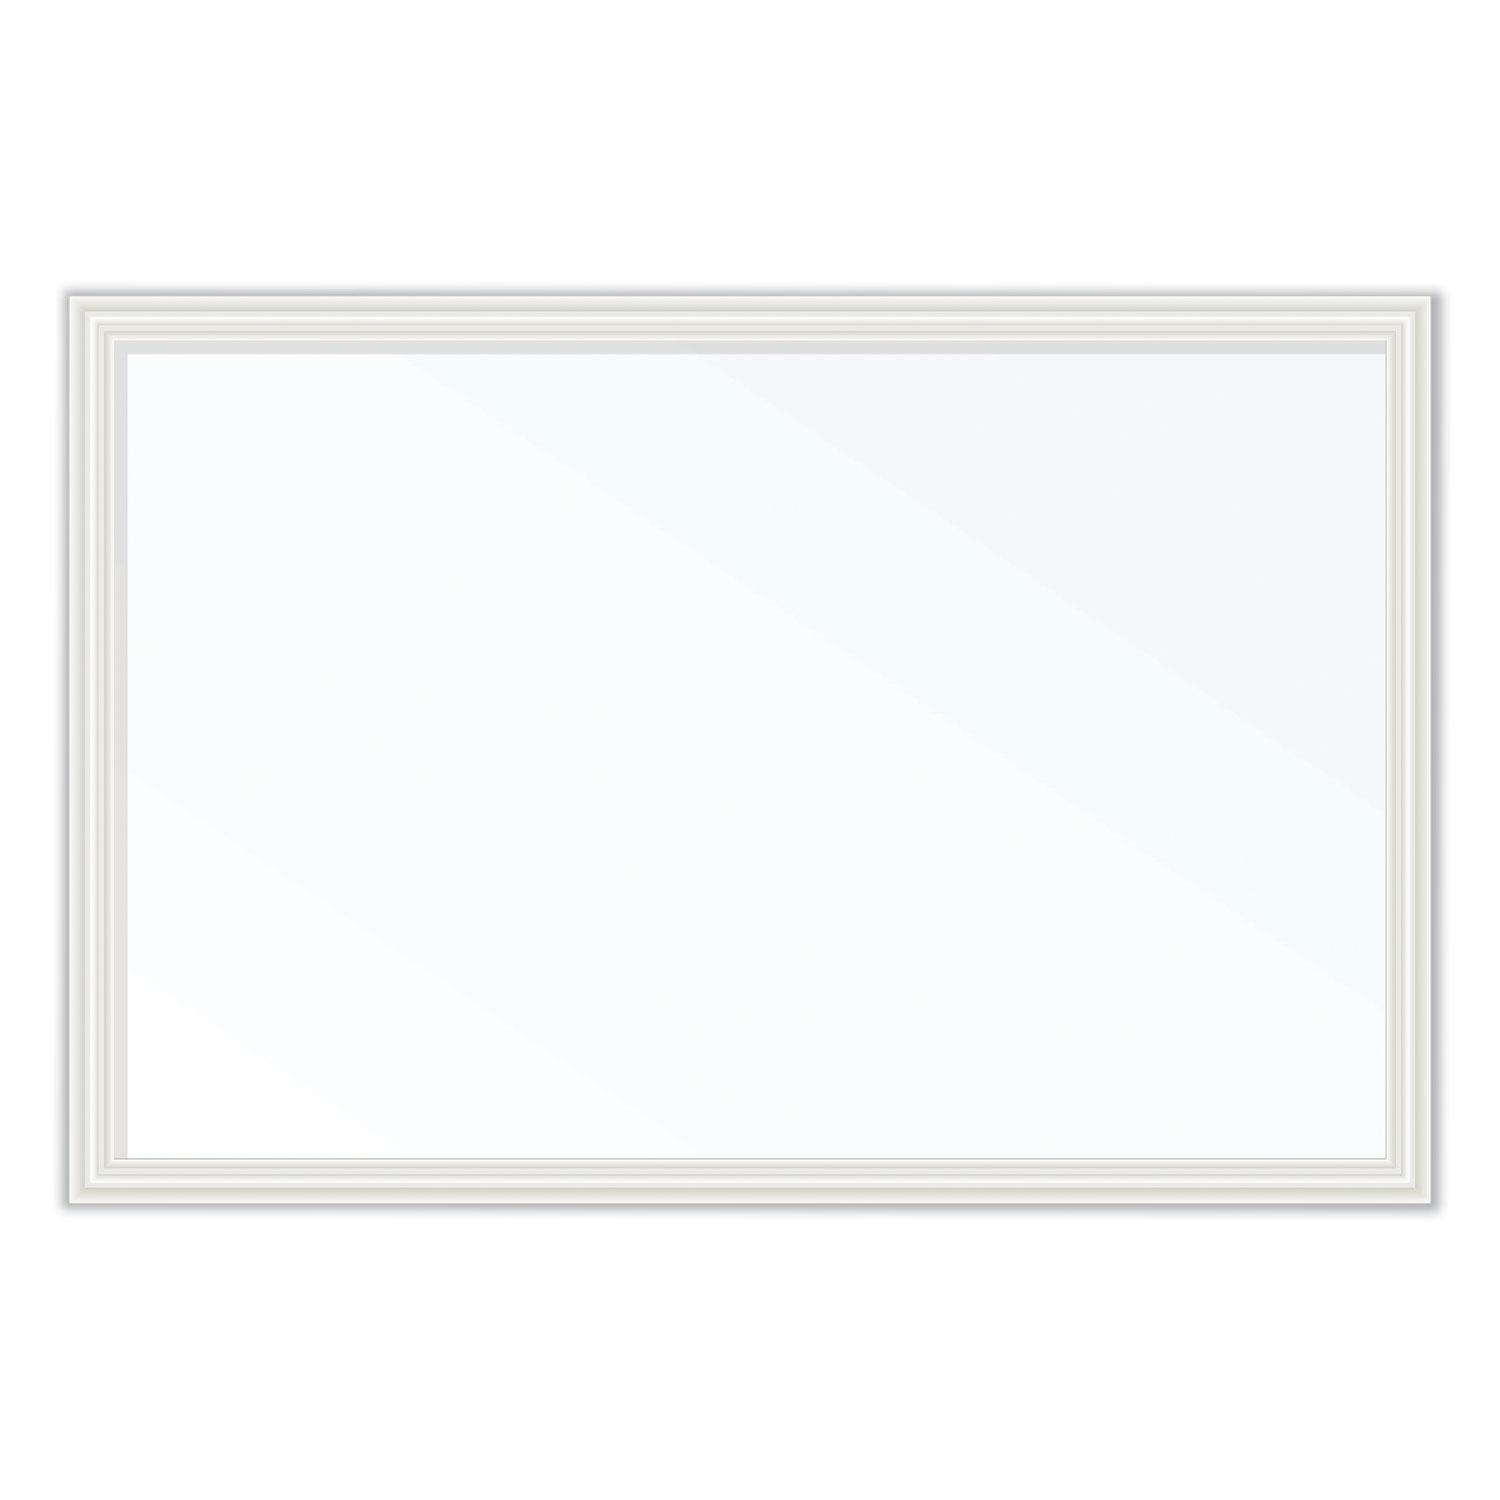  U Brands 2071U00-01 Magnetic Dry Erase Board with Decor Frame, 30 x 20, White Surface and Frame (UBR2071U0001) 